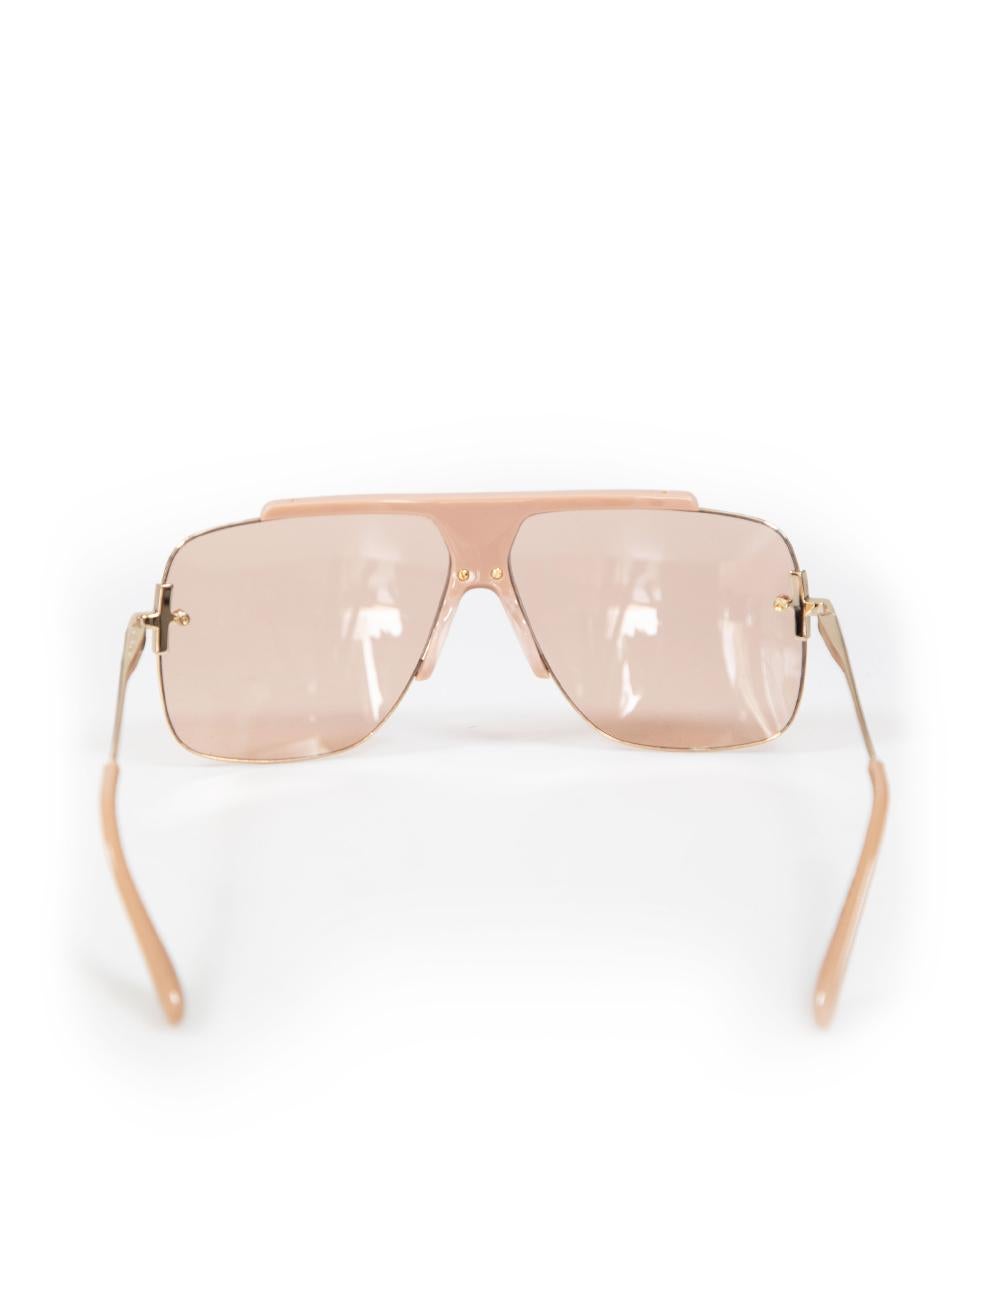 Women's Victoria Beckham Nude Navigator Frame Sunglasses For Sale